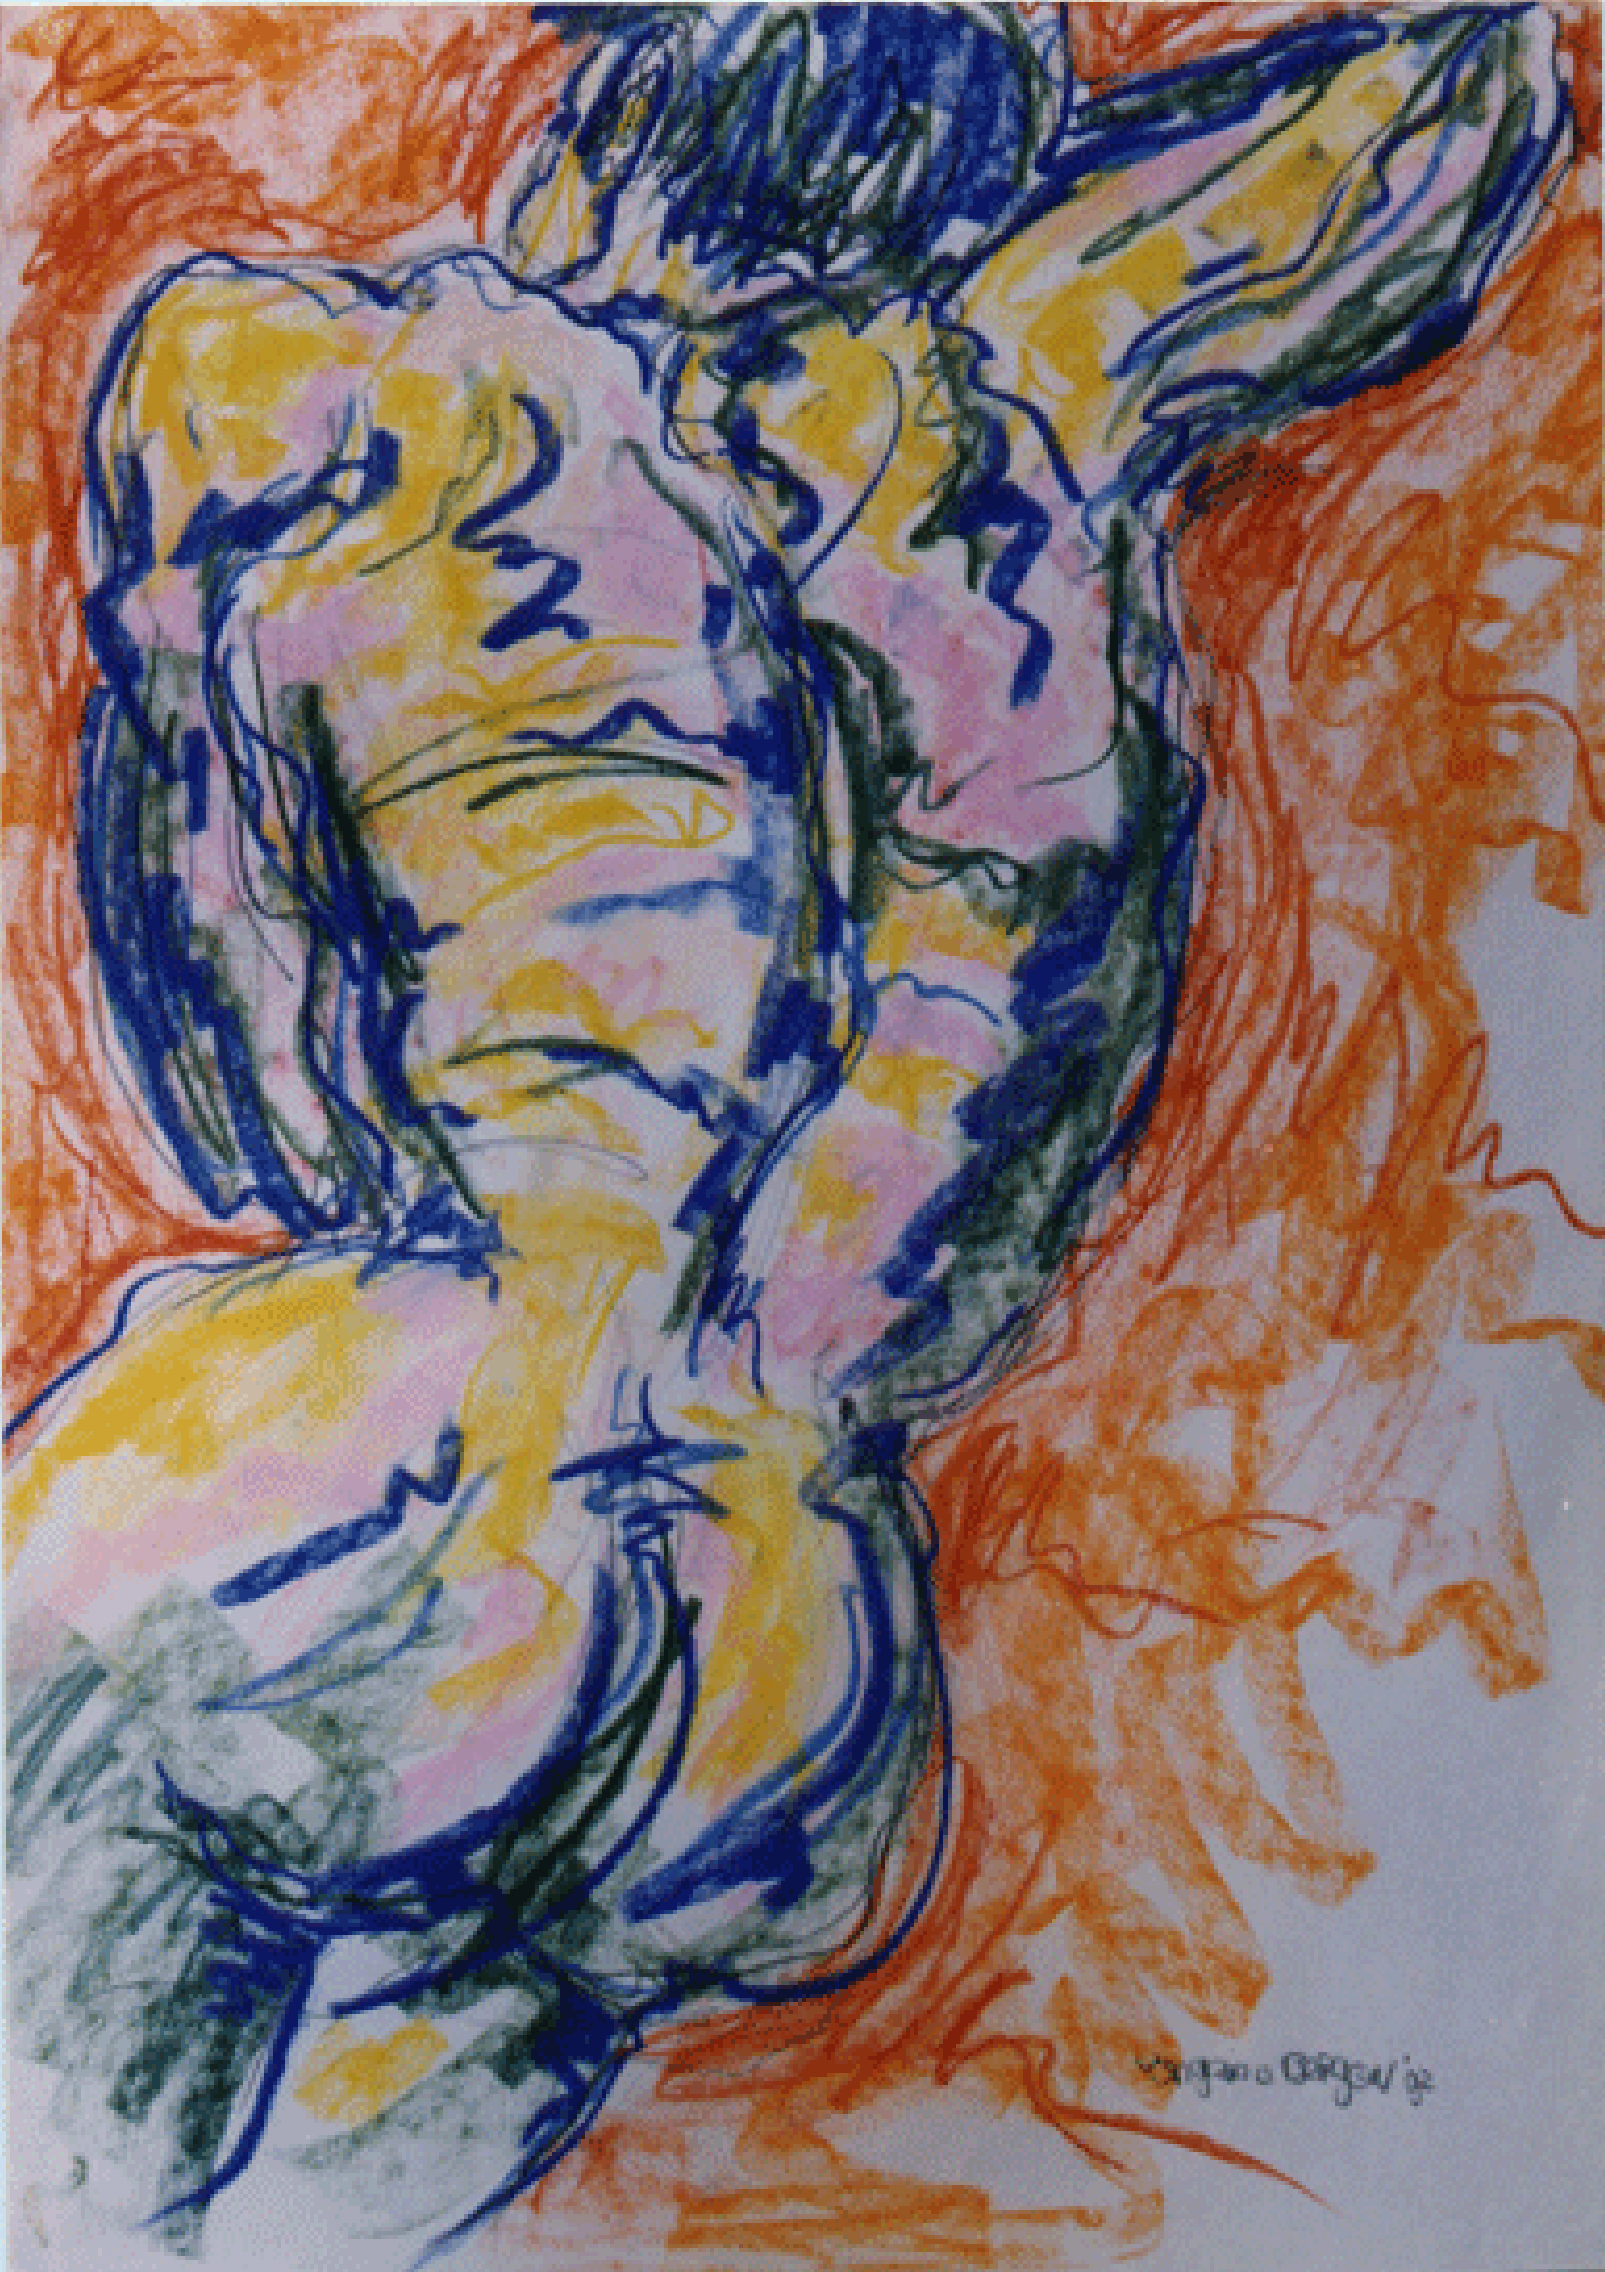 SLAPENDE MAN 1992

pastel
75-110 cm.